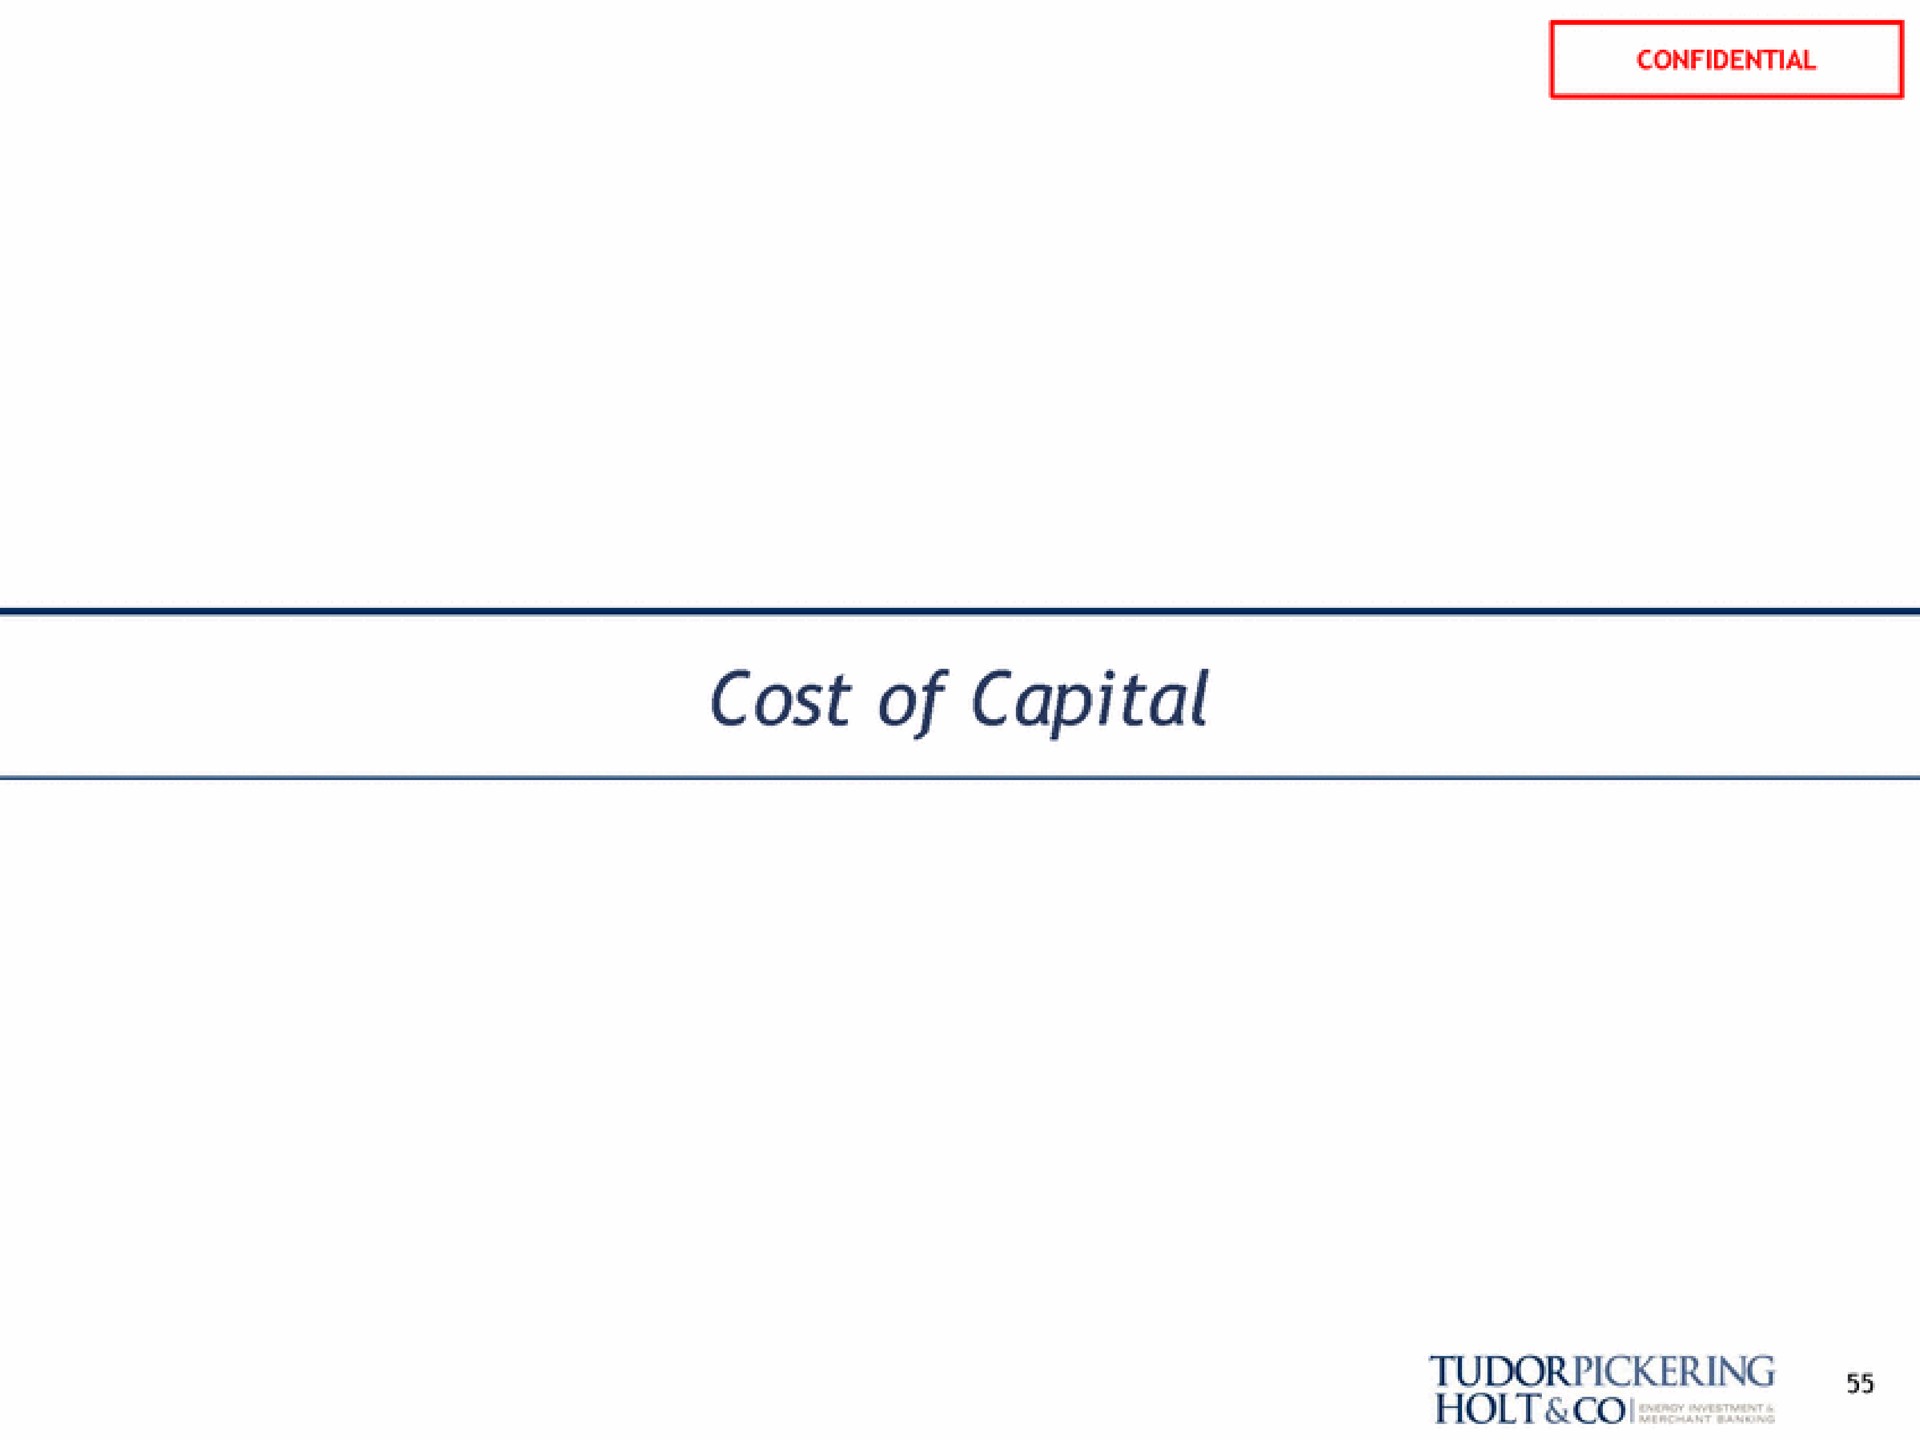 cost of capital holt | Tudor, Pickering, Holt & Co